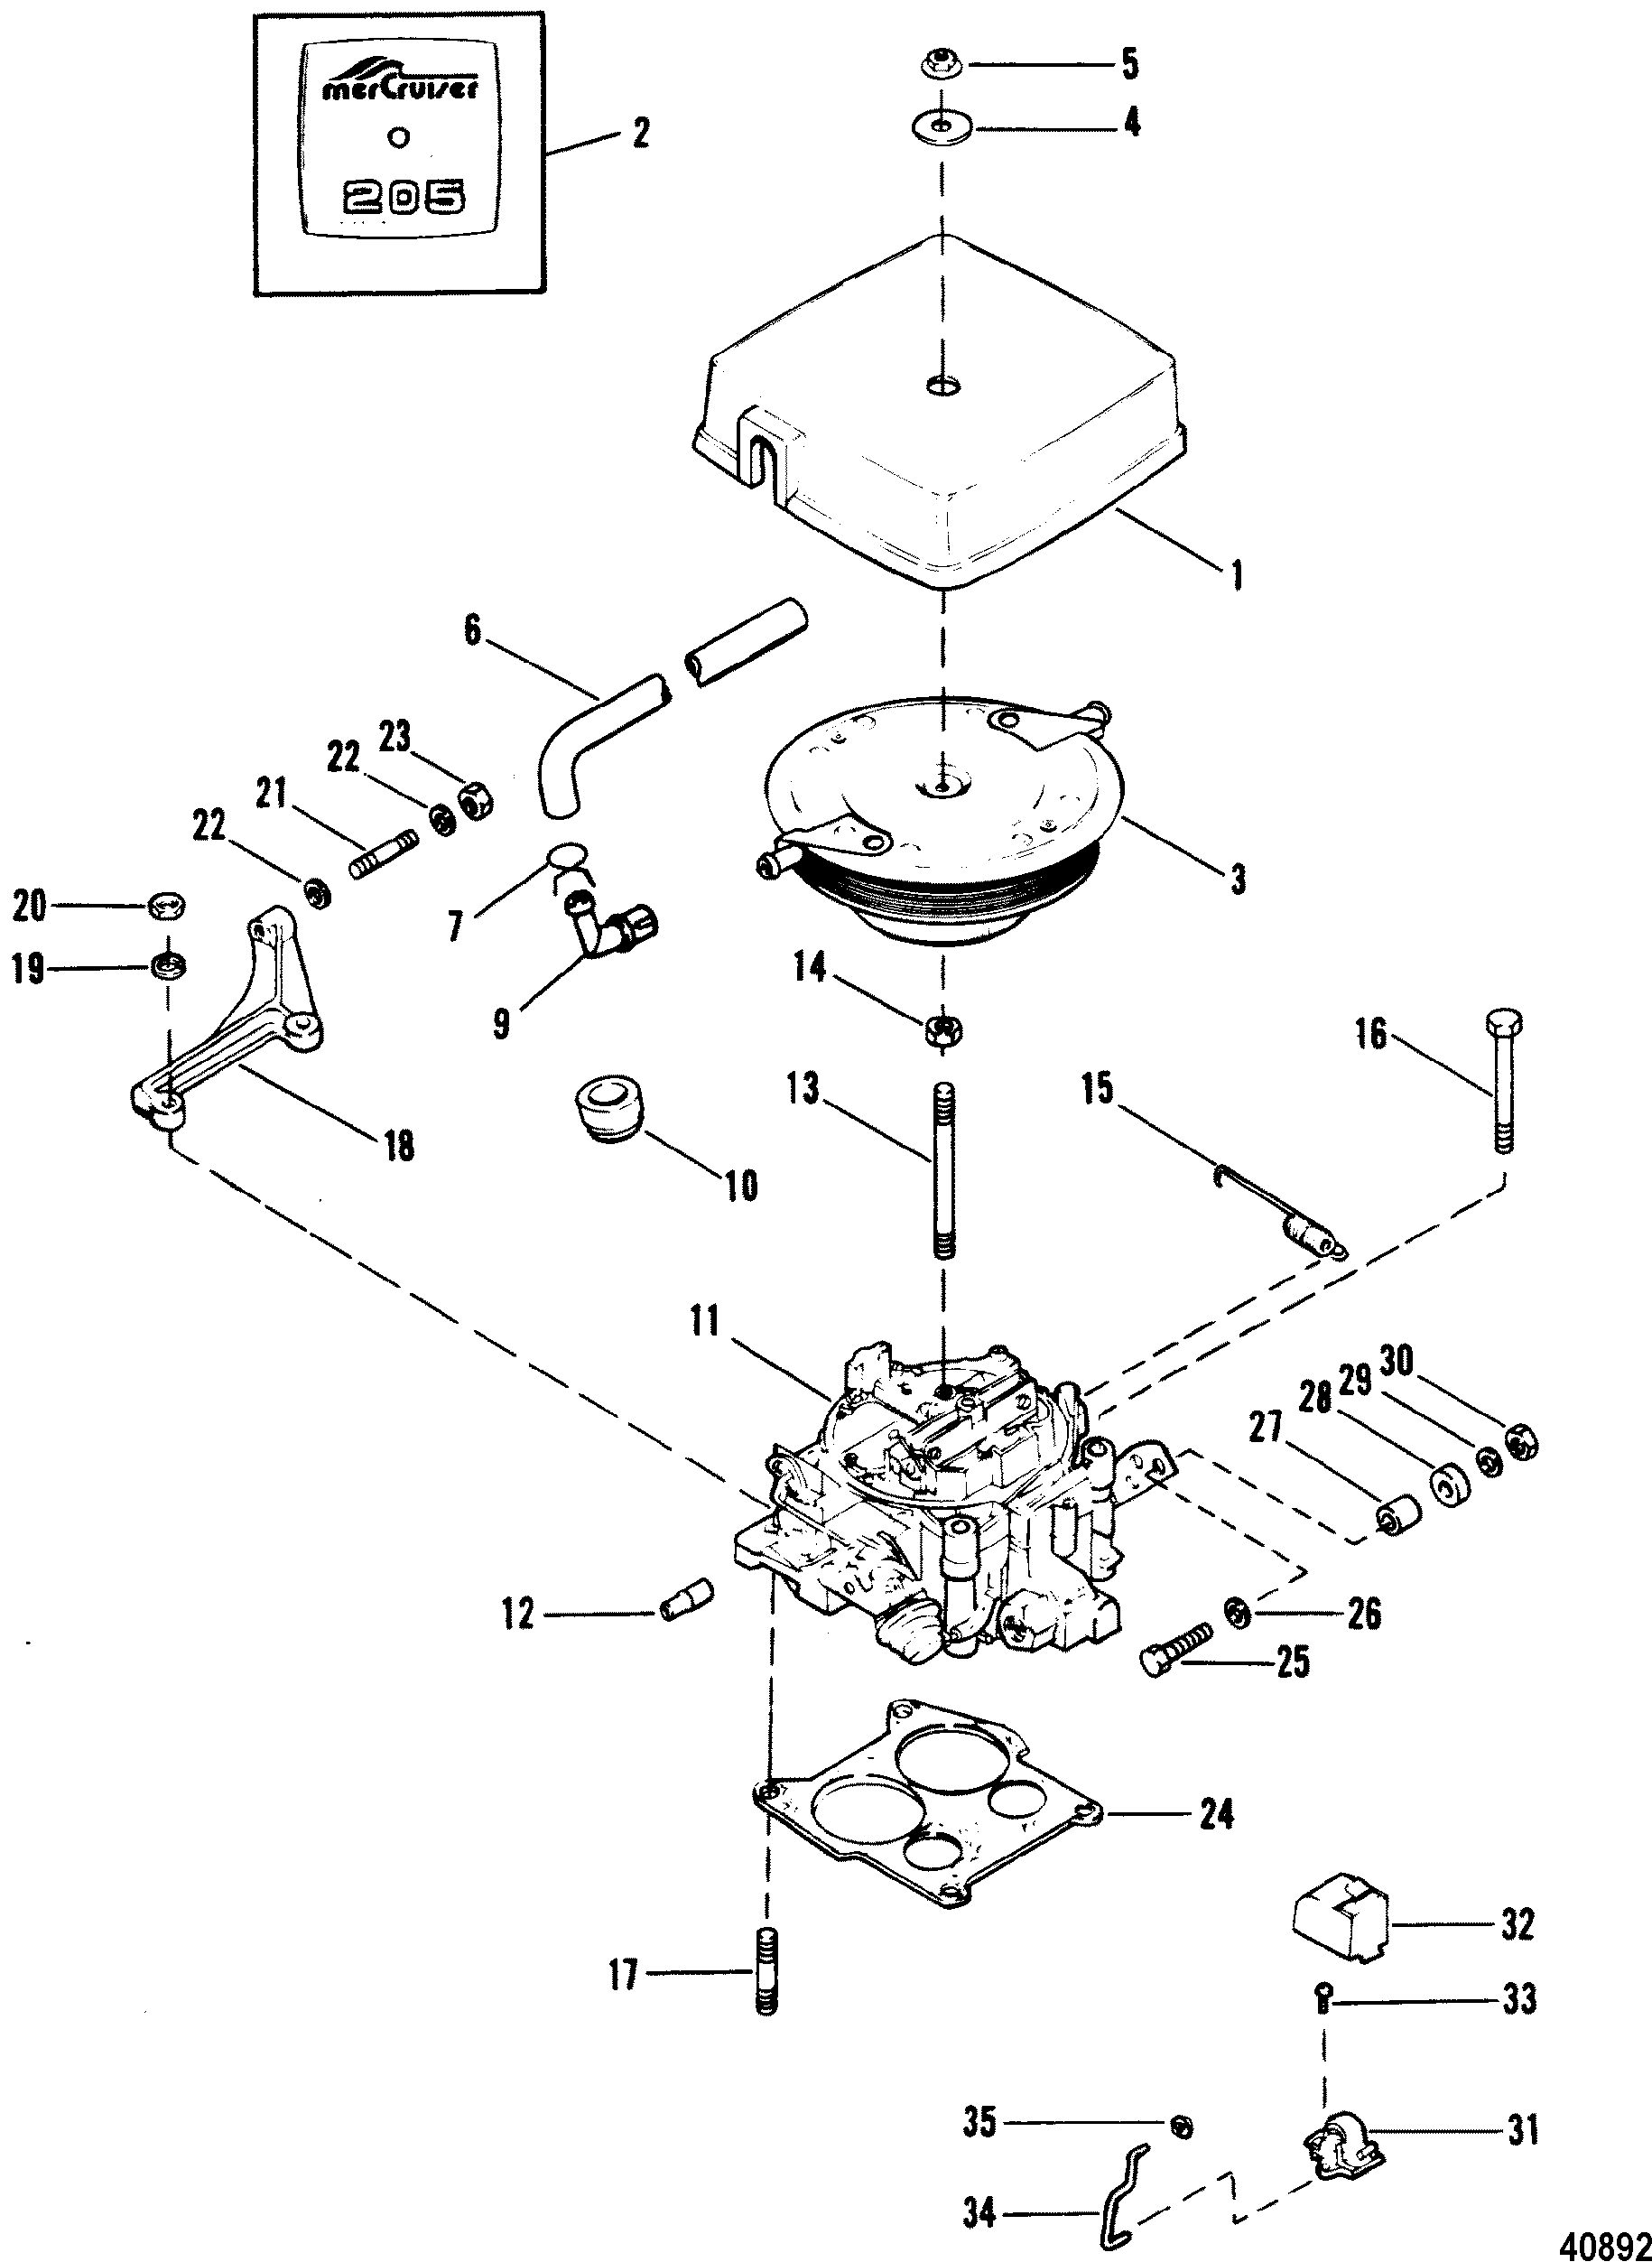 Carburetor & Throttle Linkage(205)